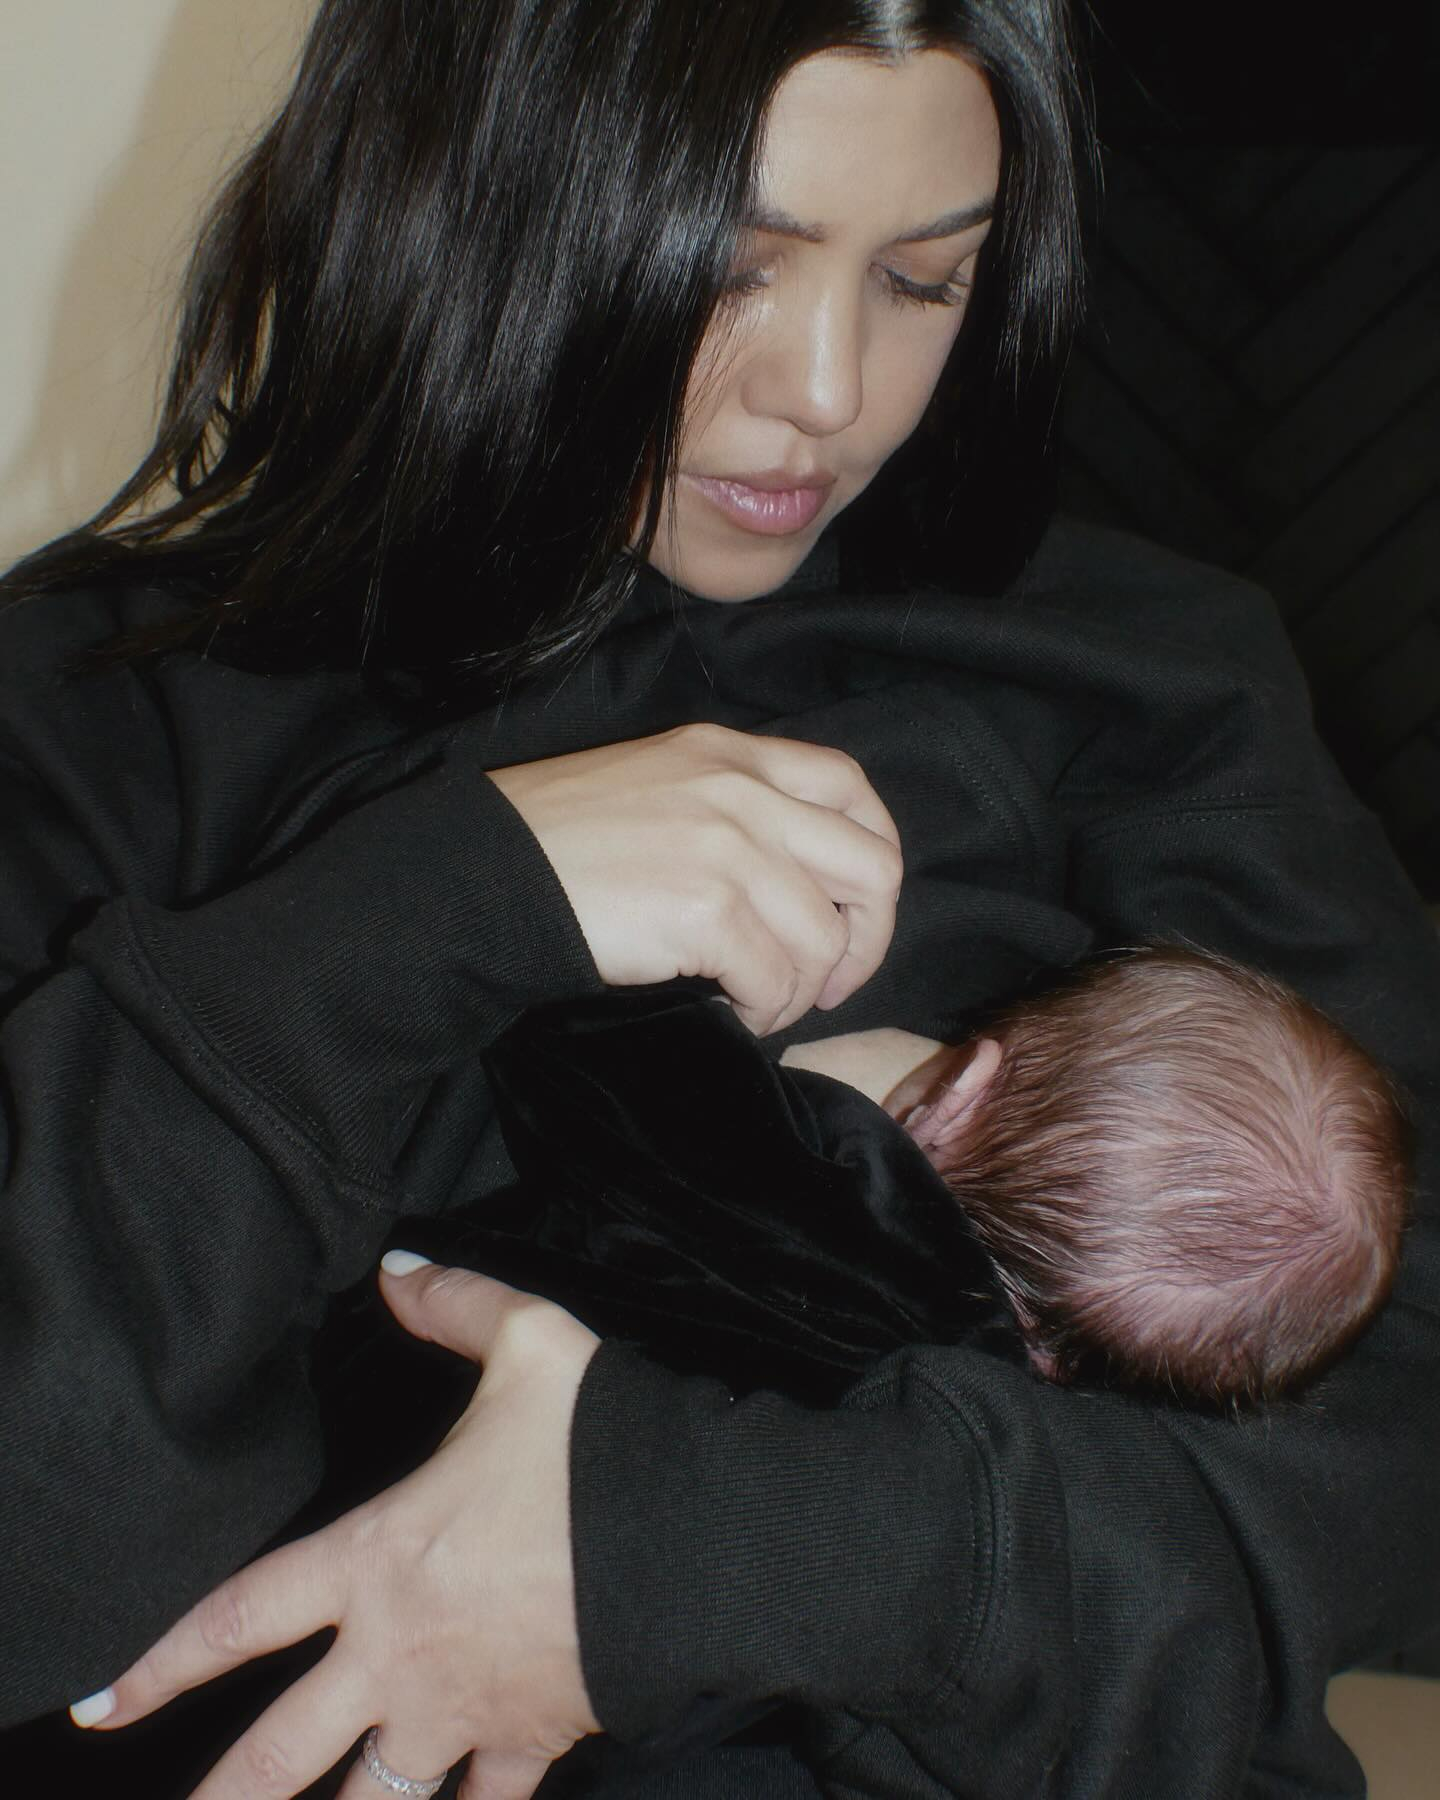 Kourtney was recently seen breastfeeding her newborn son Rocky